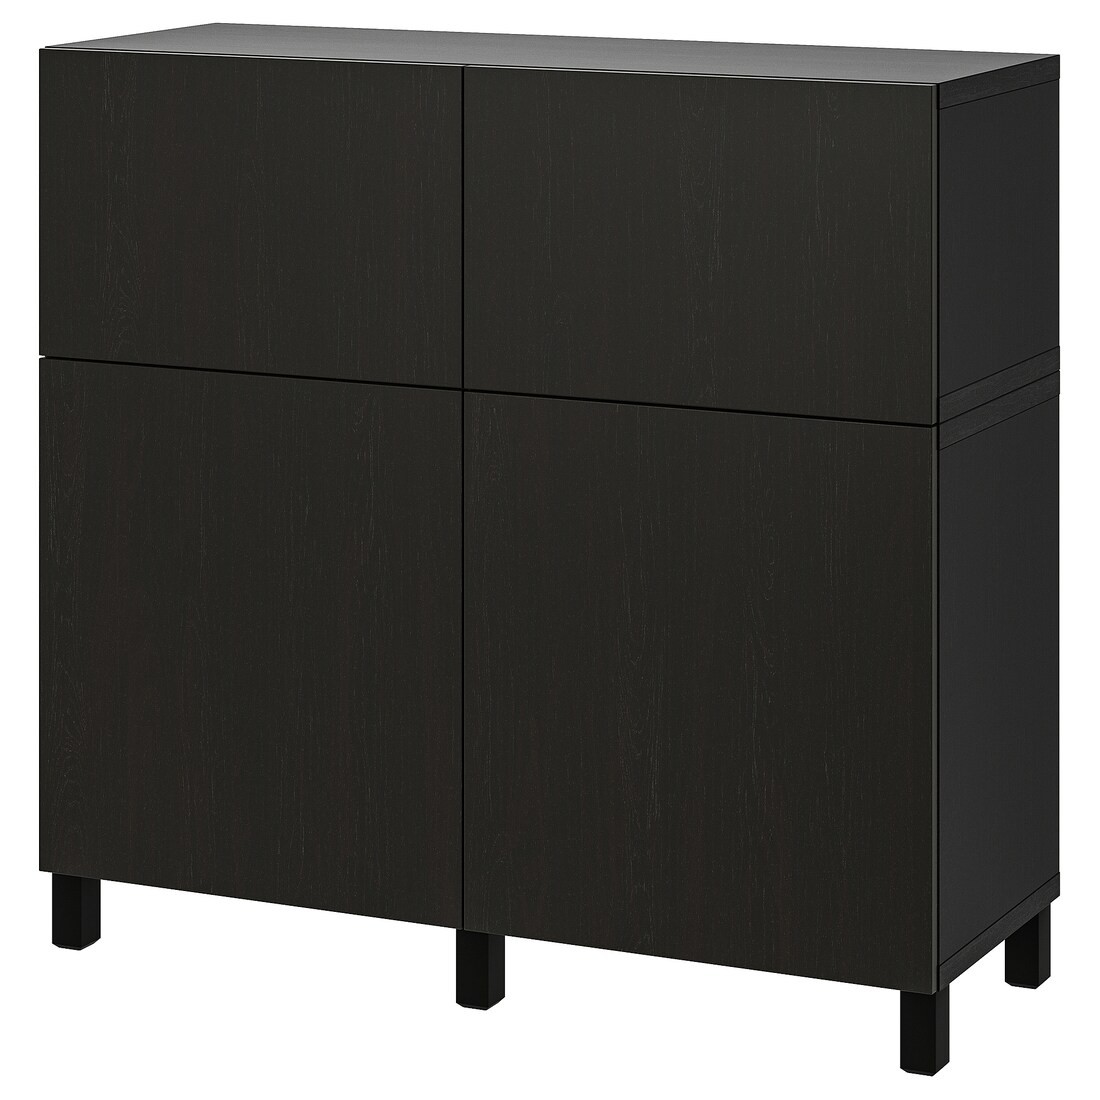 IKEA BESTÅ БЕСТО Комбинация для хранения с дверцами / ящиками, черно-коричневый / Lappviken / Stubbarp черно-коричневый, 120x42x112 см 09480806 094.808.06